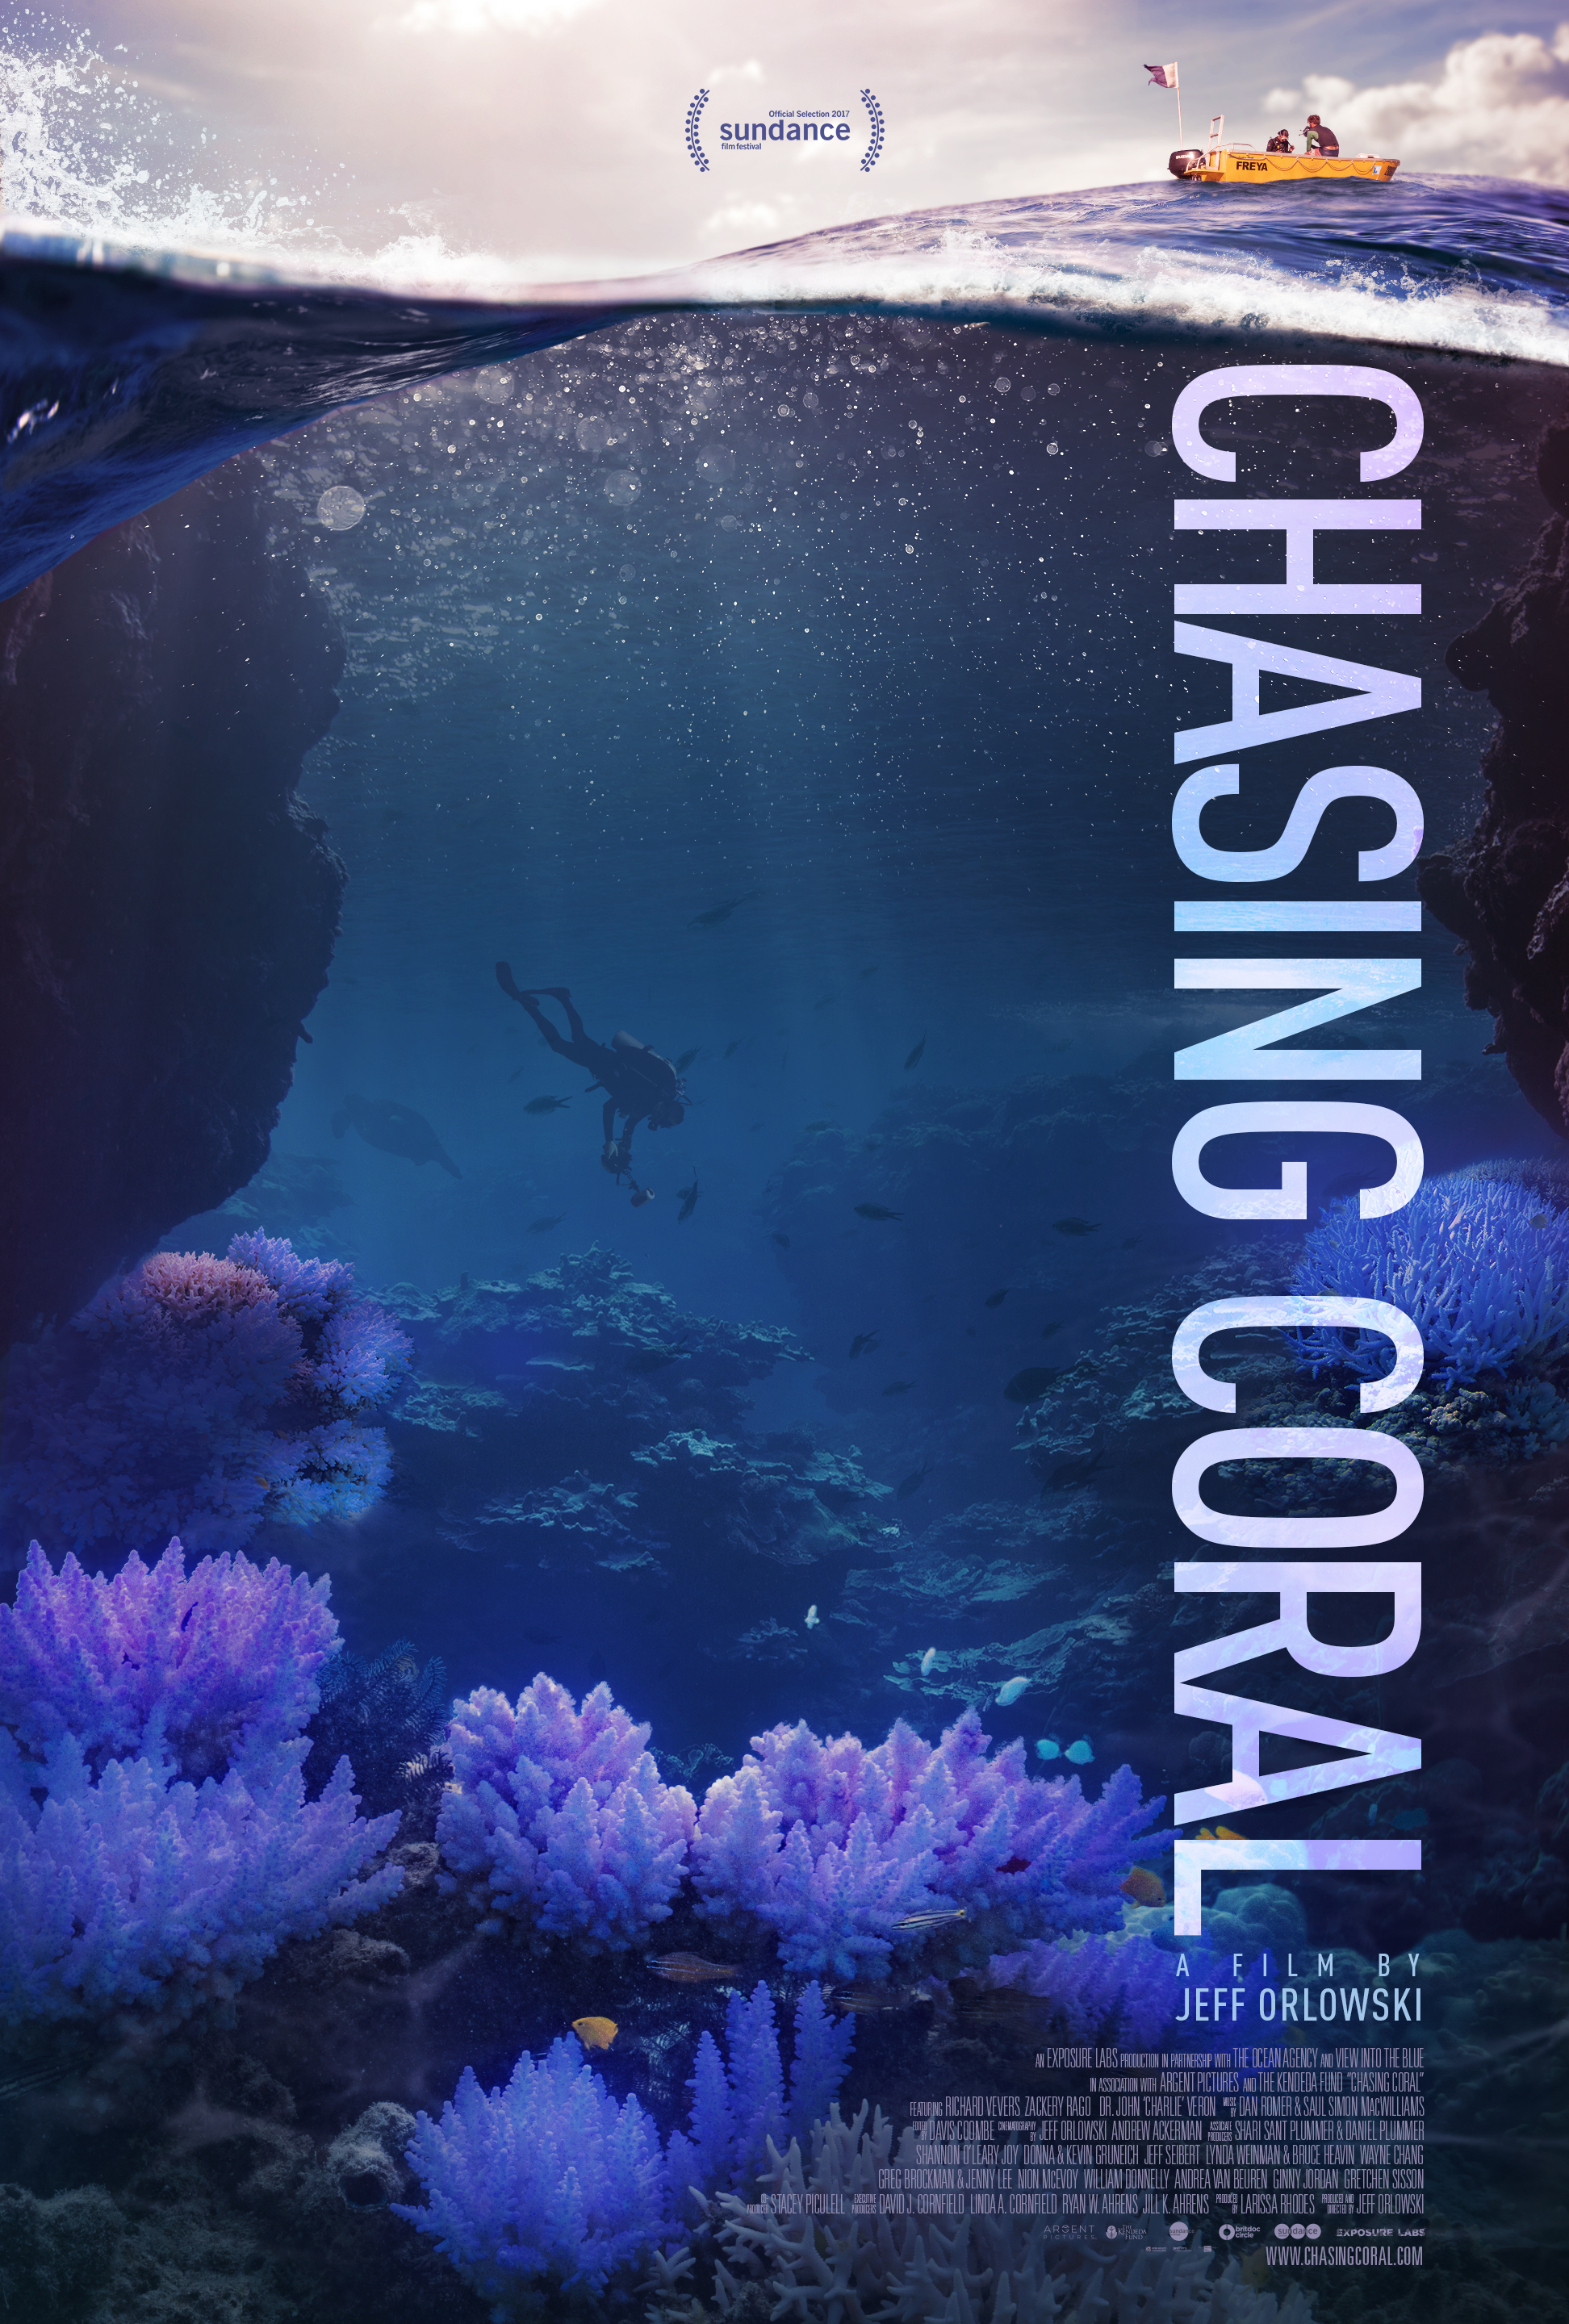 Nonton film Chasing Coral layarkaca21 indoxx1 ganool online streaming terbaru